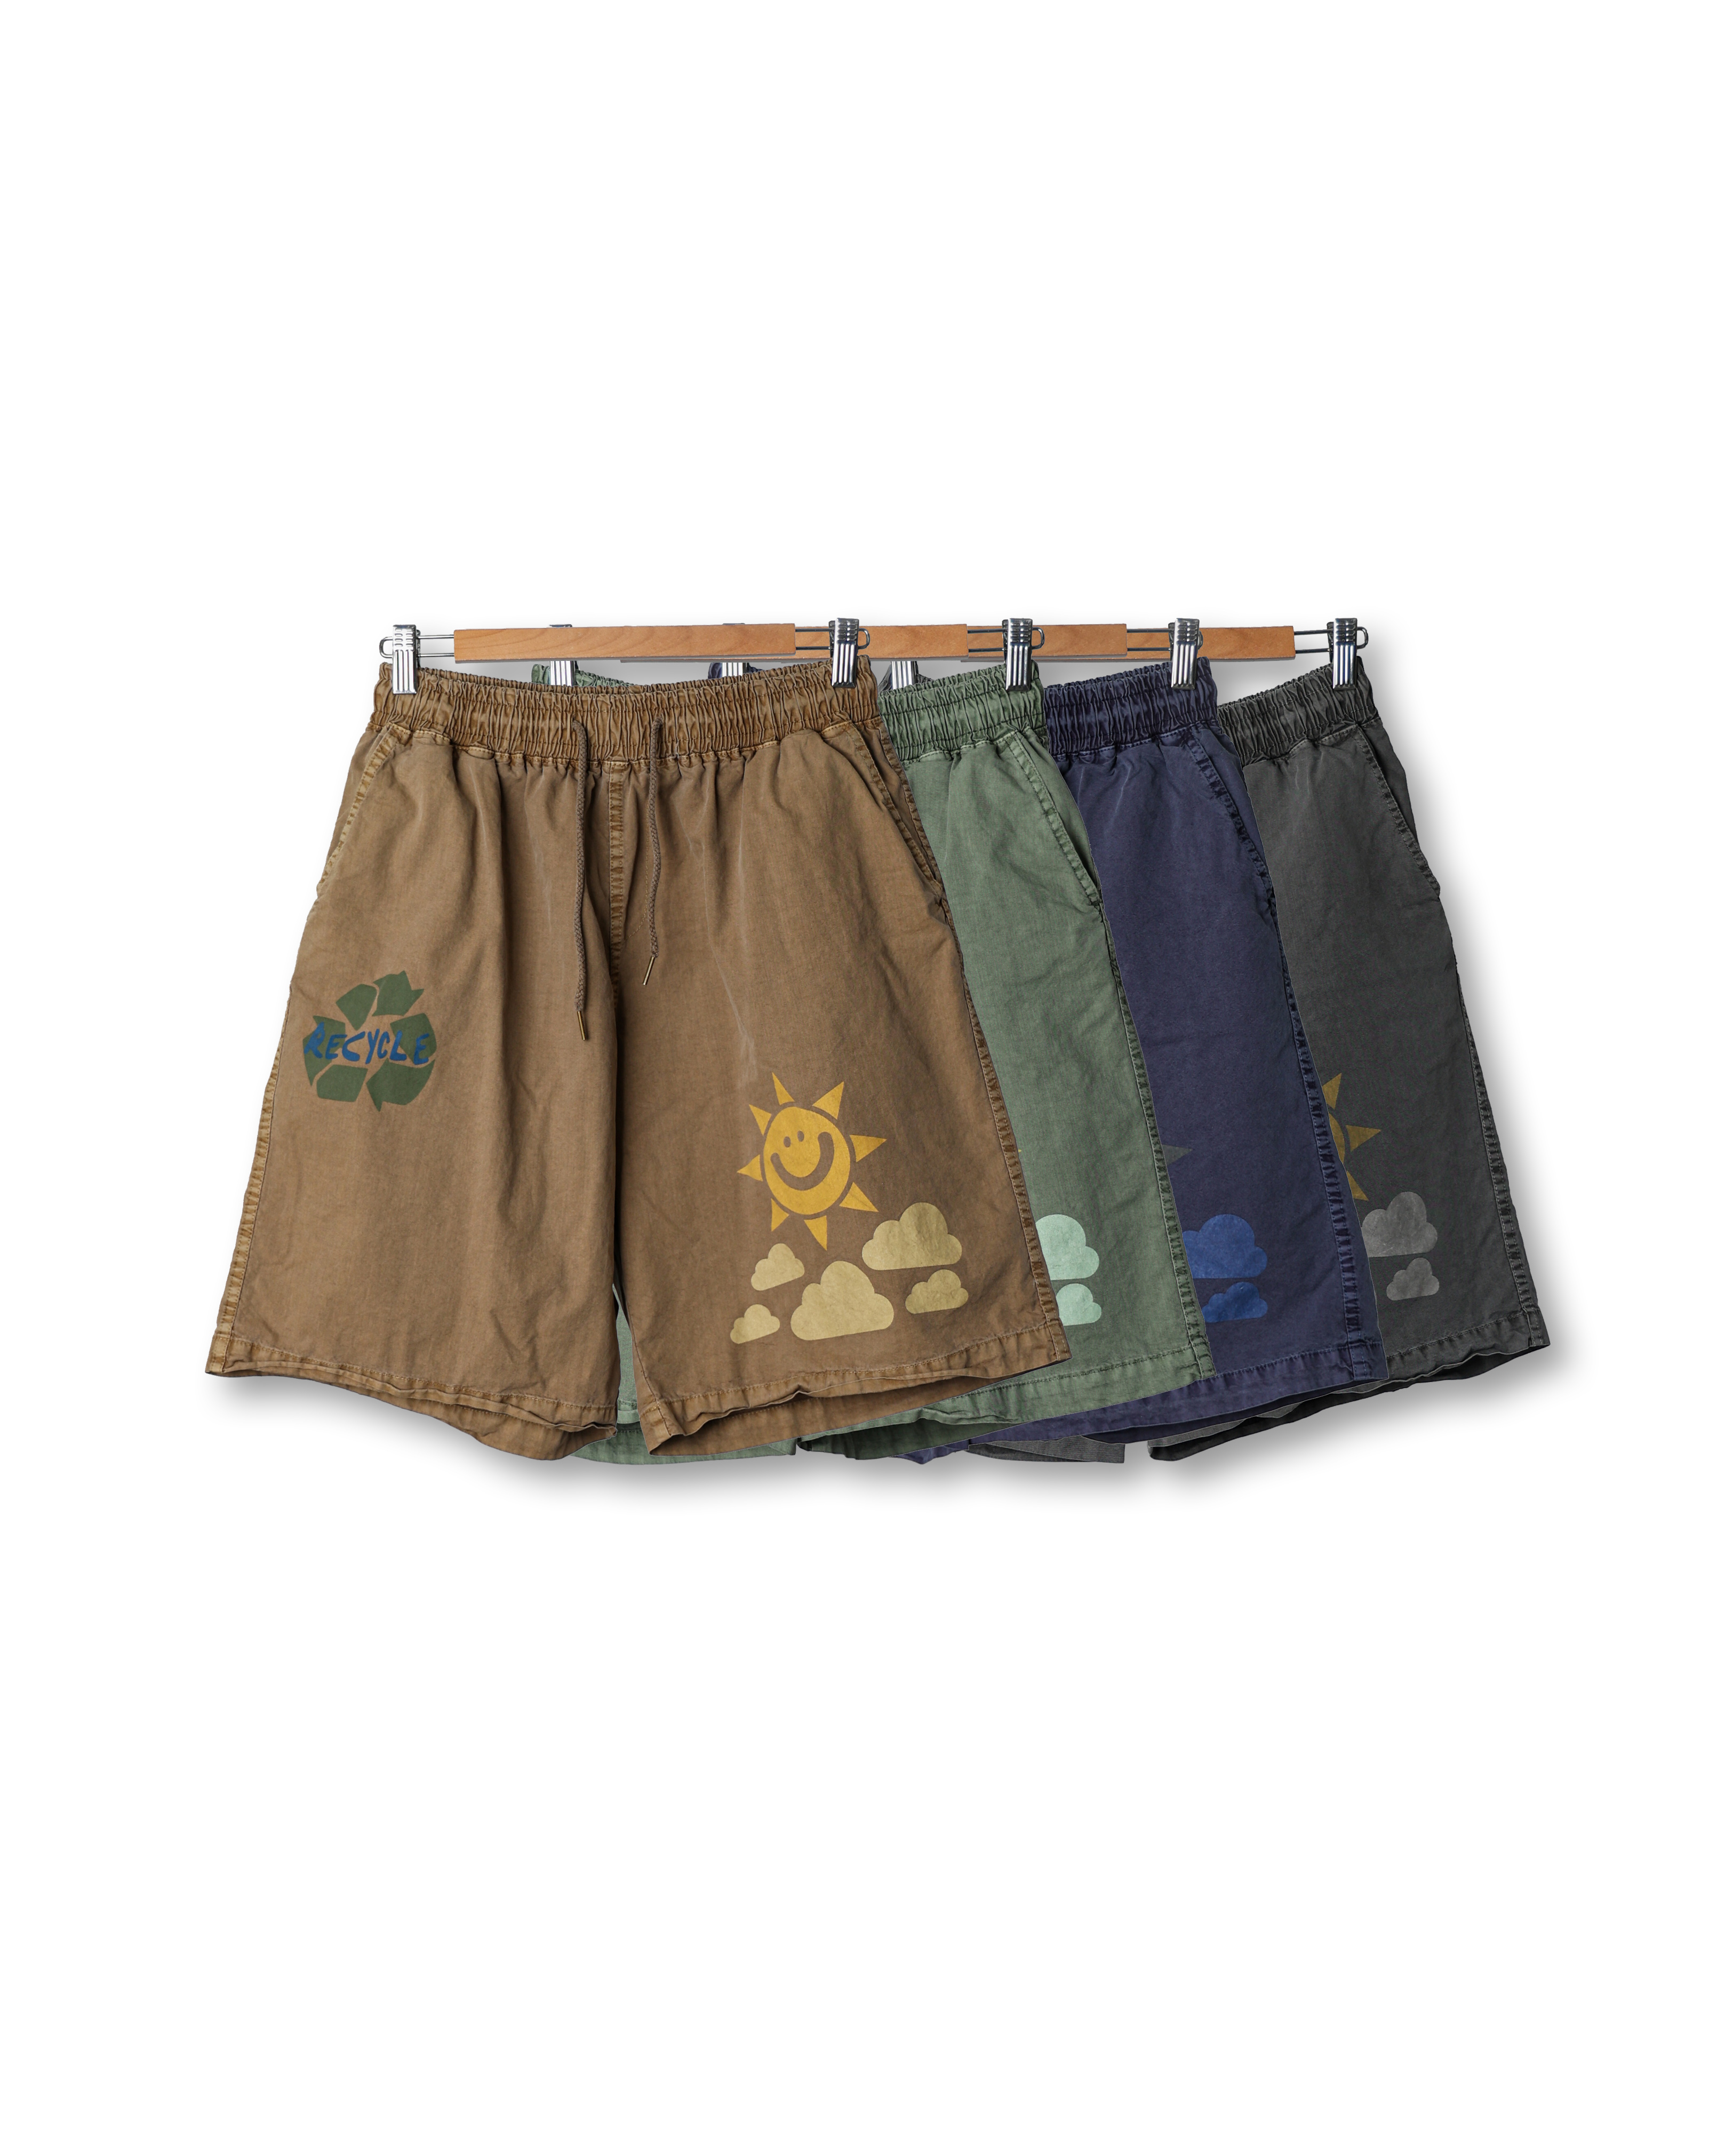 HFIVE SUNNY Graphic Vintage Half Pants (Charcoal/Navy/Olive/Beige)